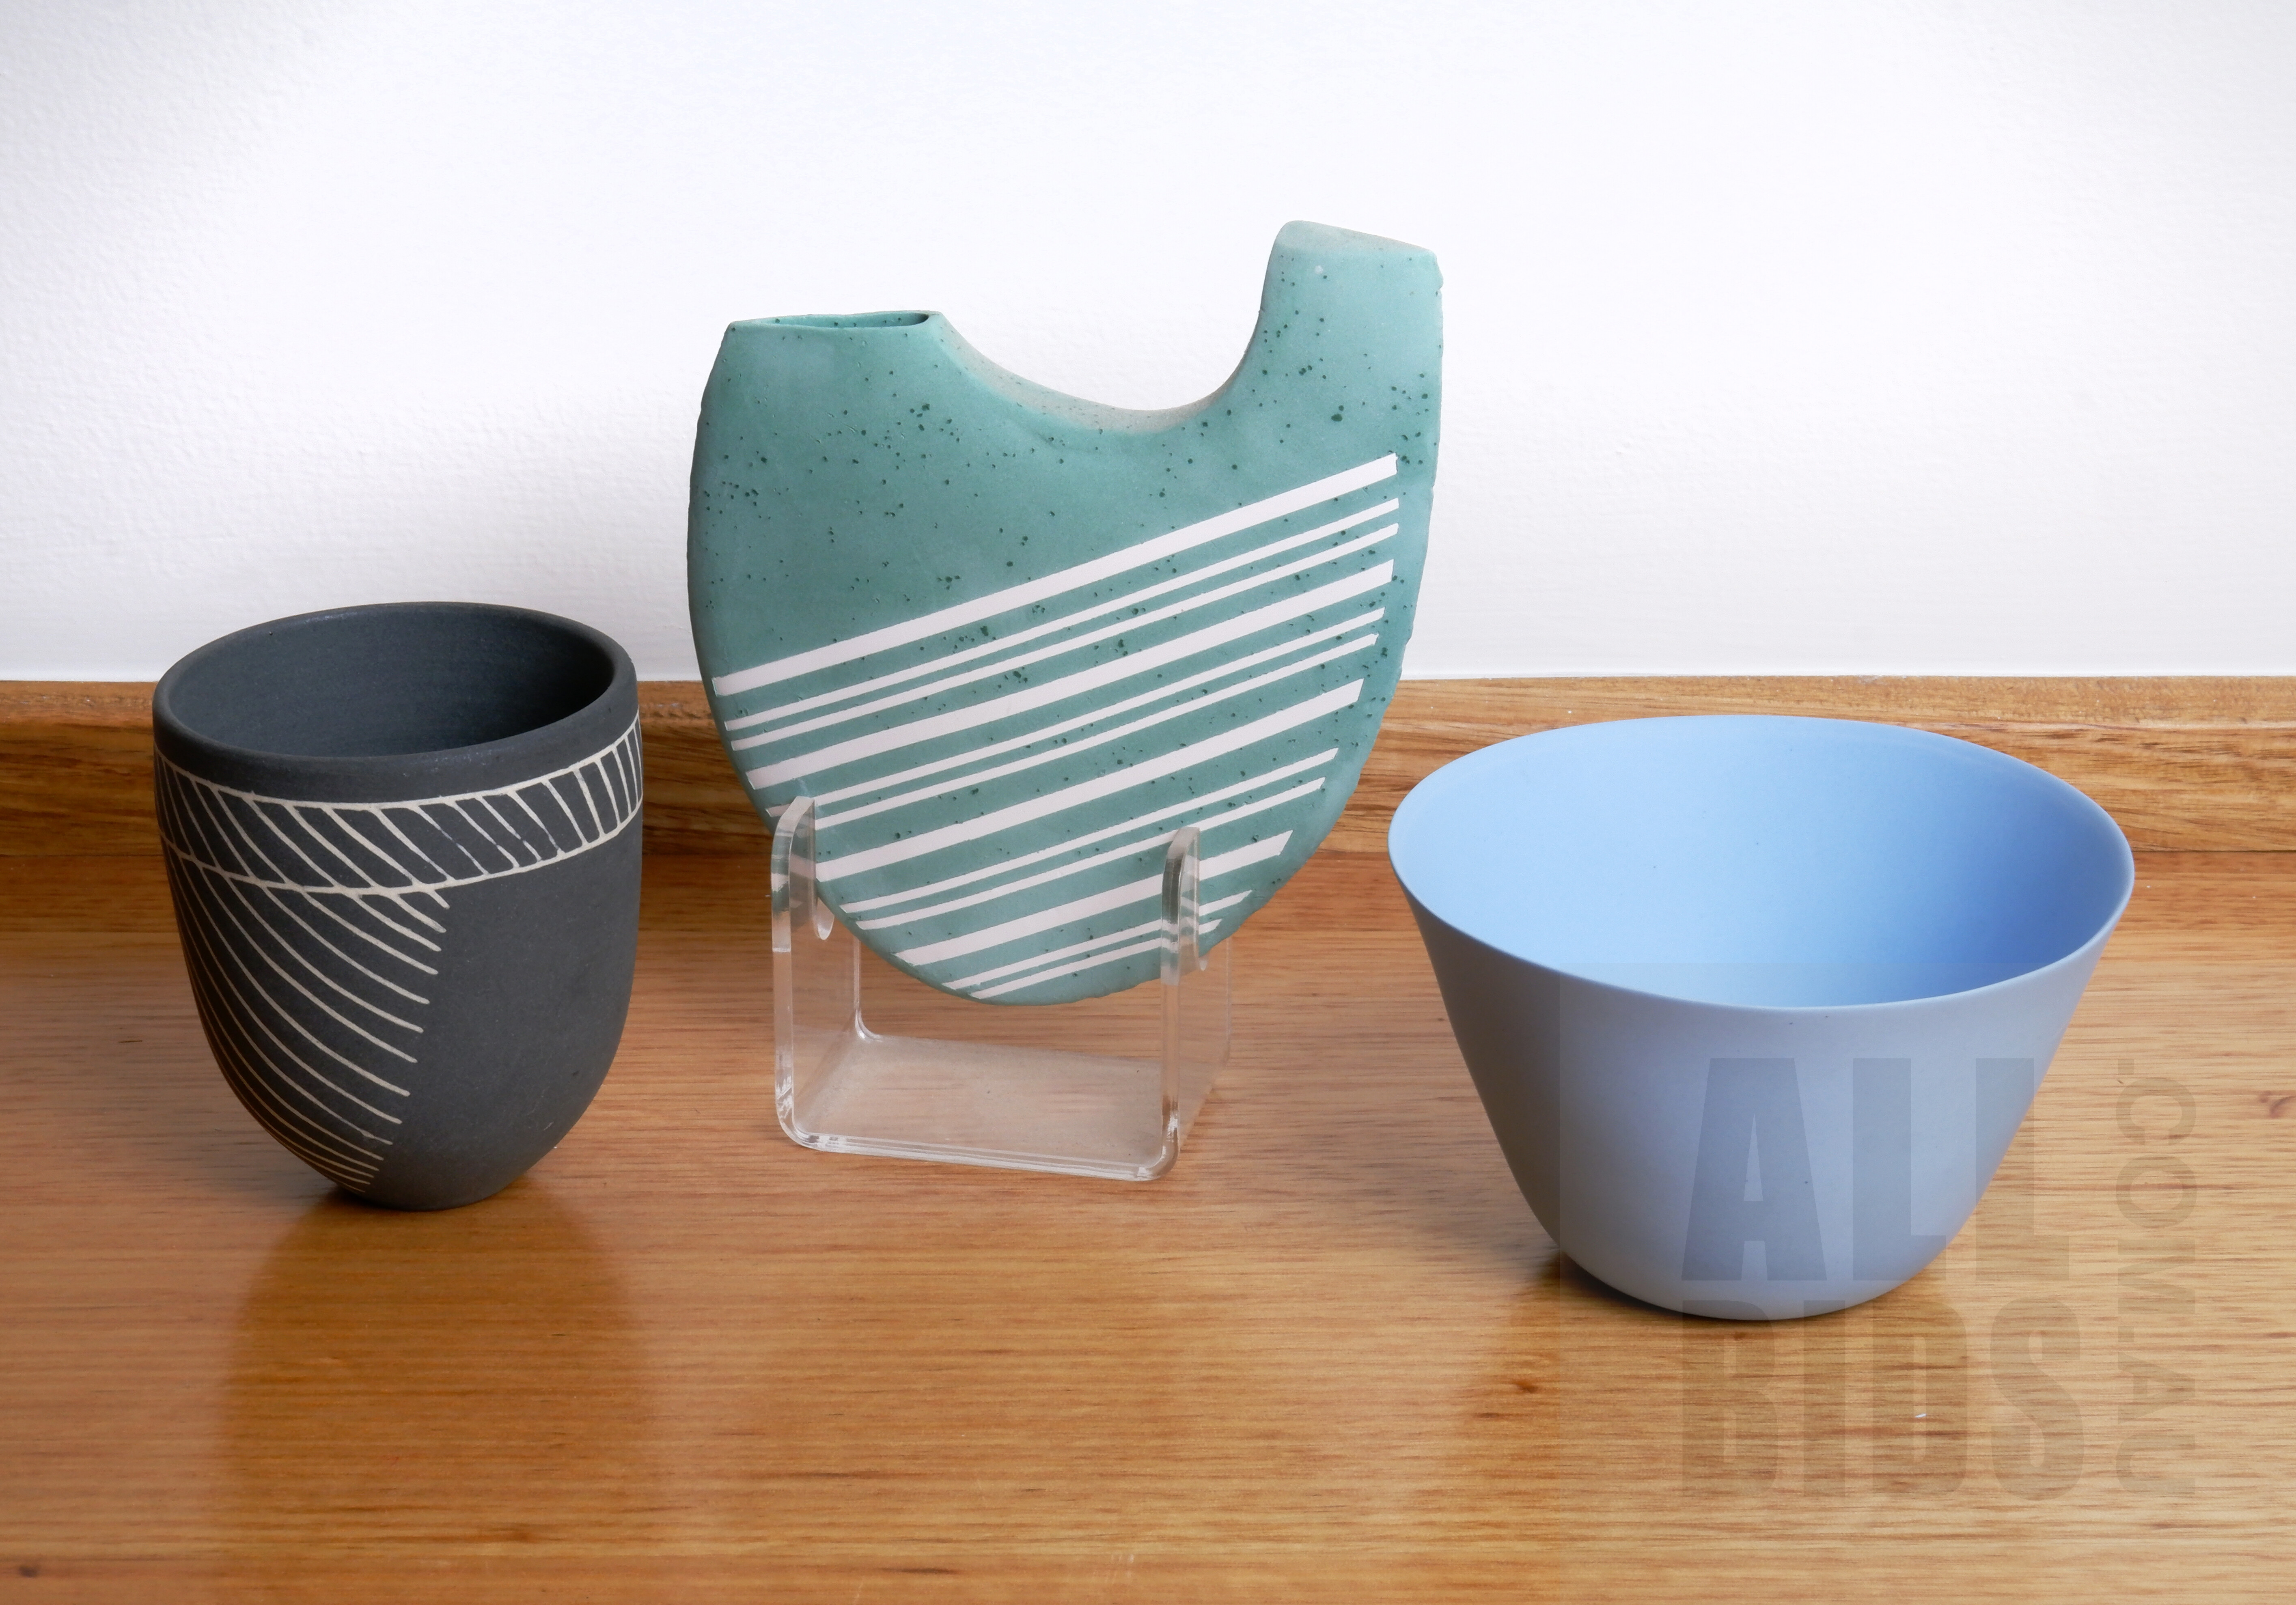 'Two Sarit Cohen Studio Ceramic Vessels and Another Australian Studio Ceramic Form'